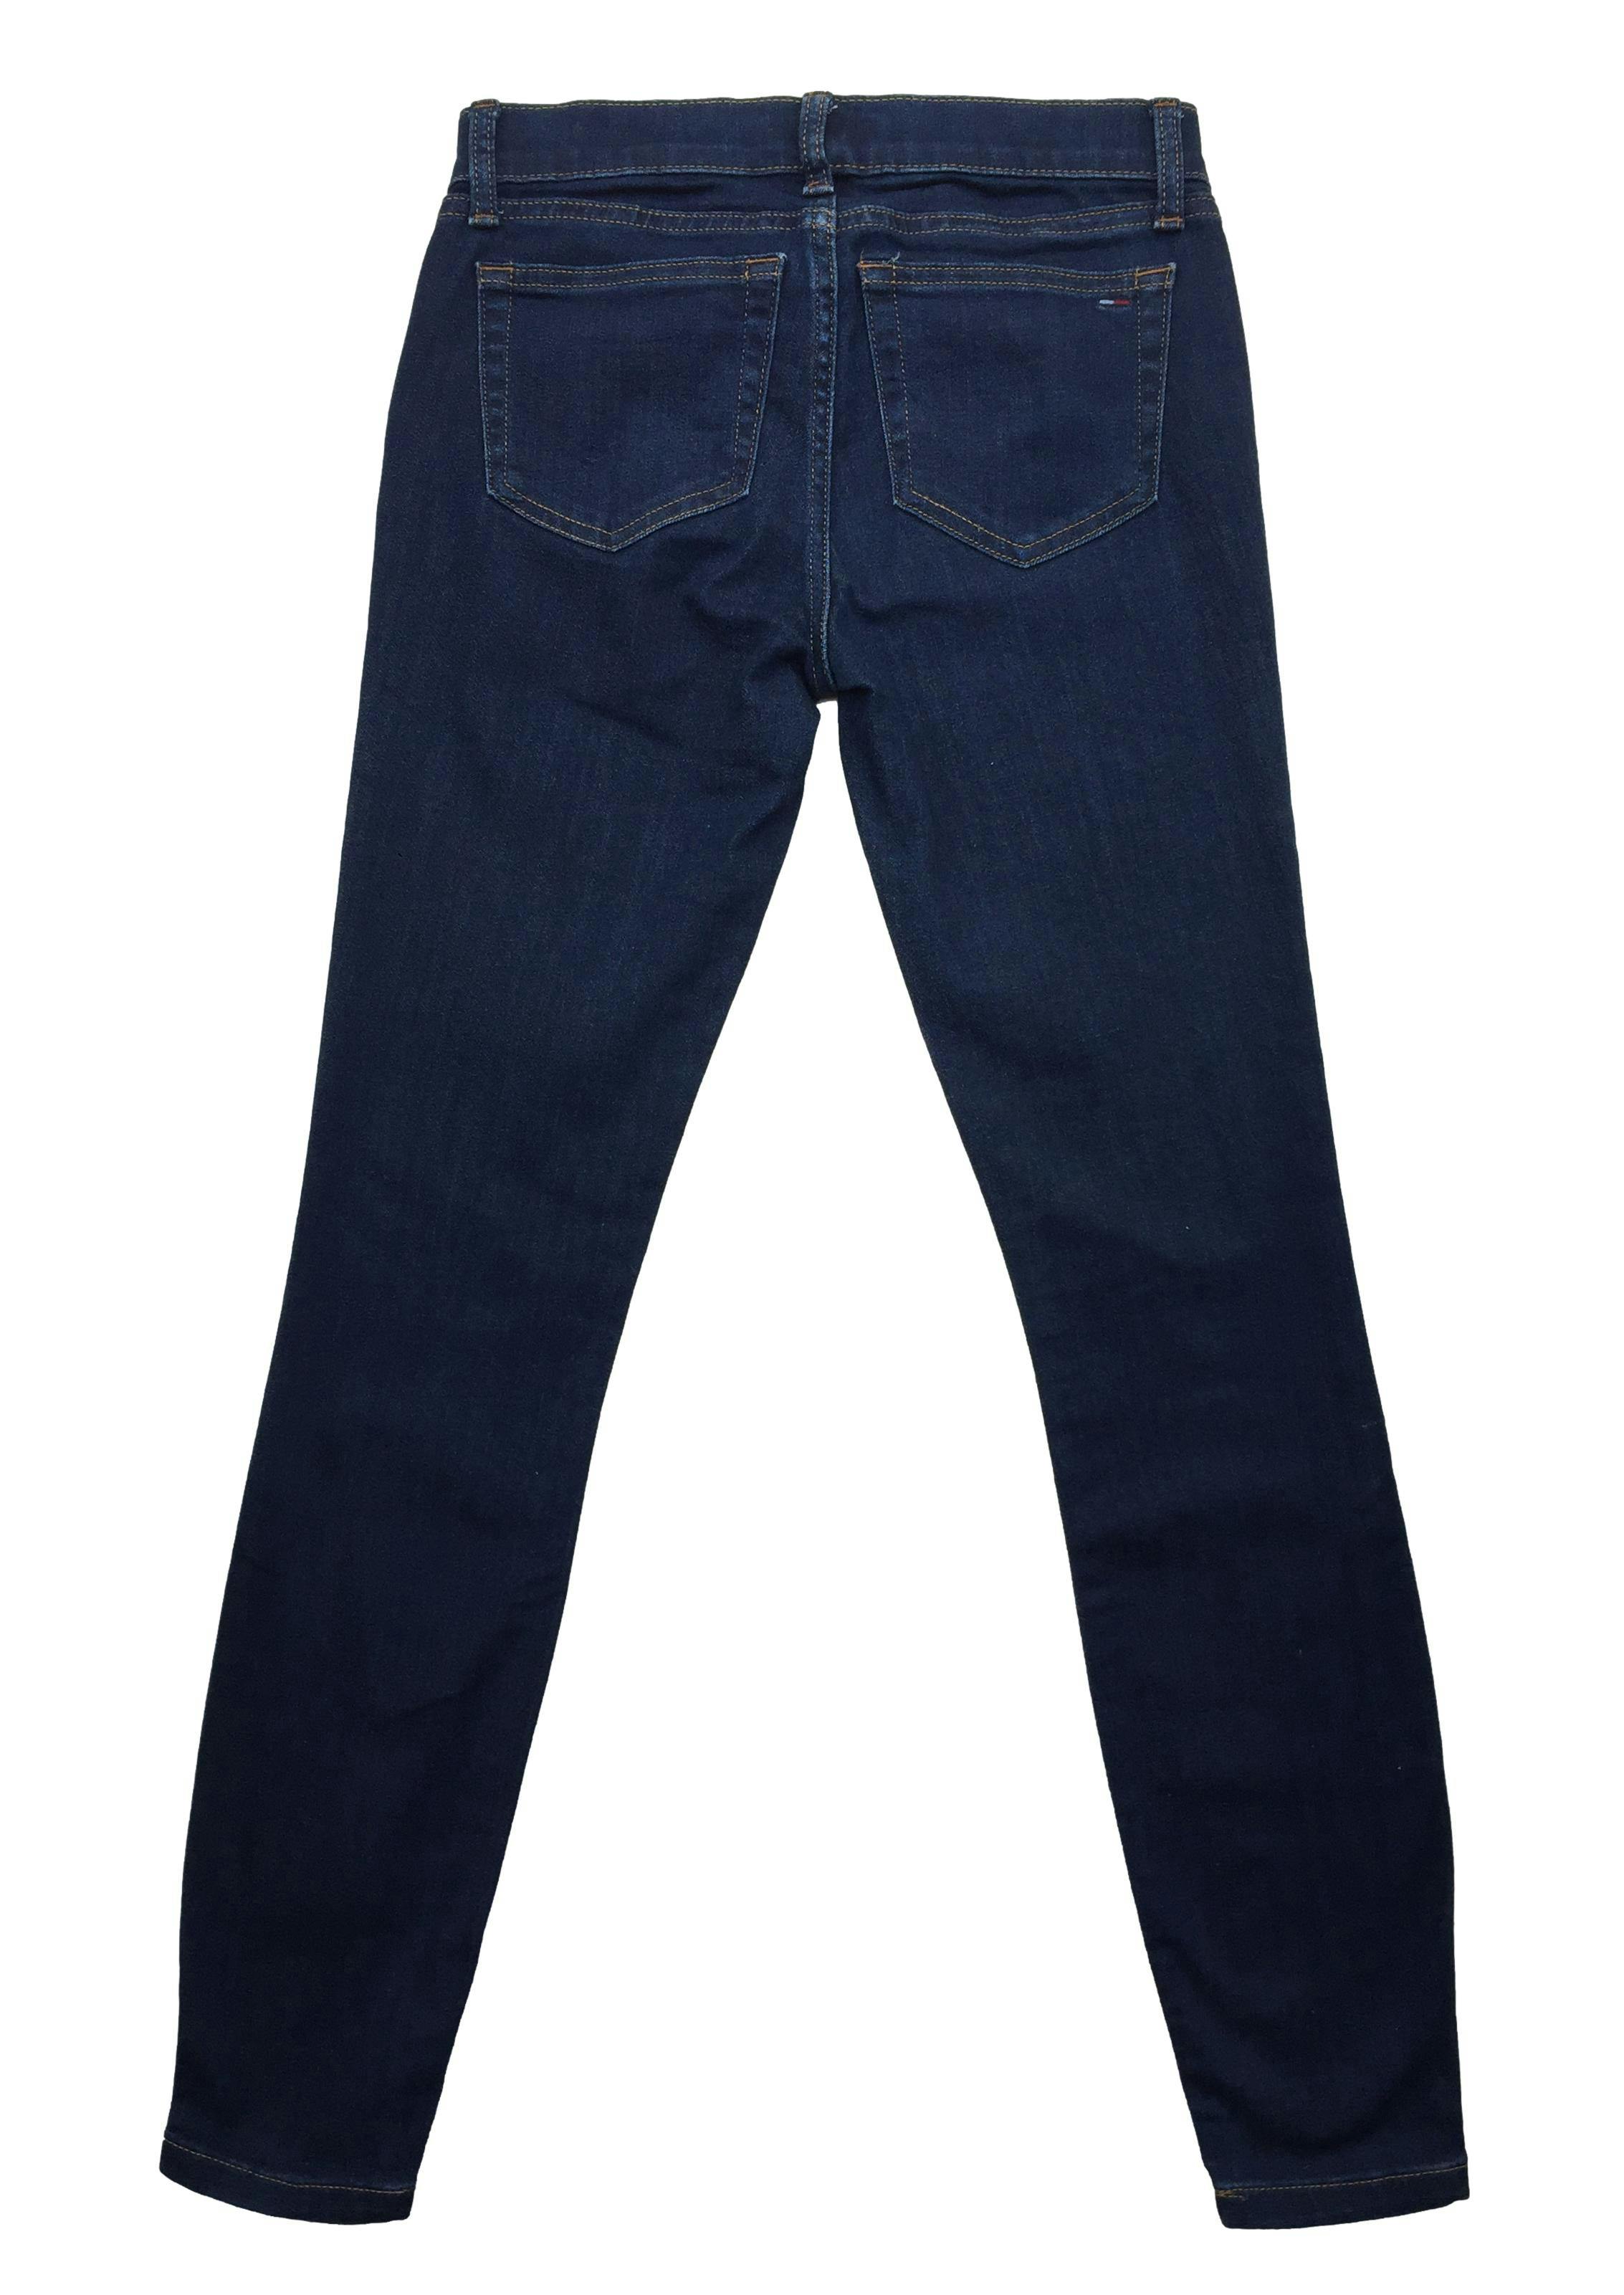 Skinny jean Tommy Hilfiger azul sólido 70% algodón, five pockets. Cintura 70cm Tiro 21cm Largo 95cm